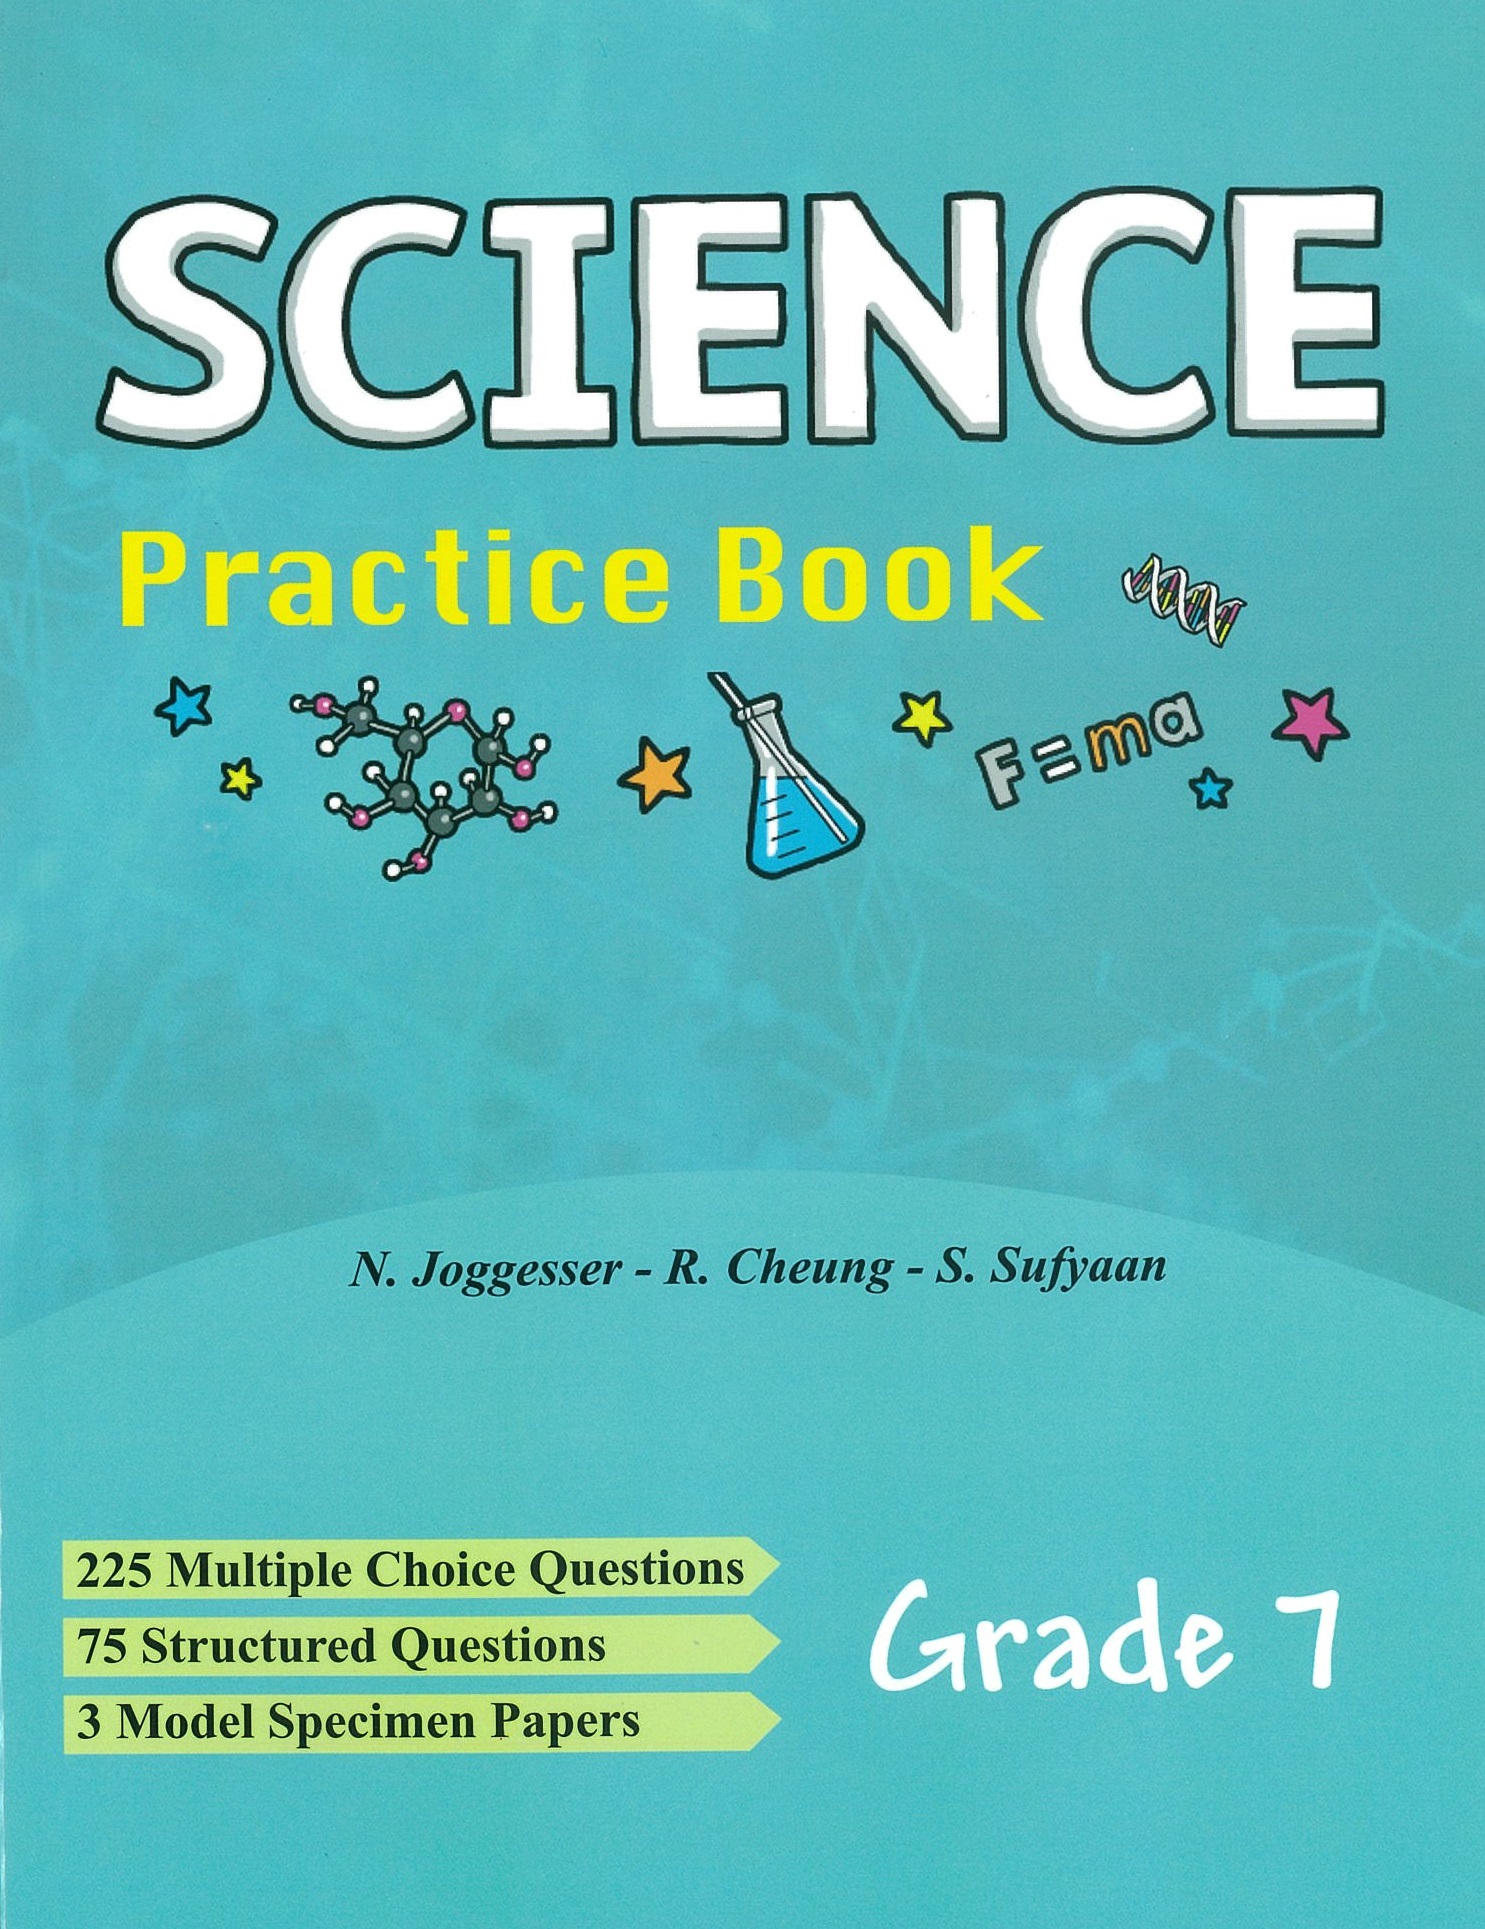 SCIENCE PRACTICE BOOK GRADE 7